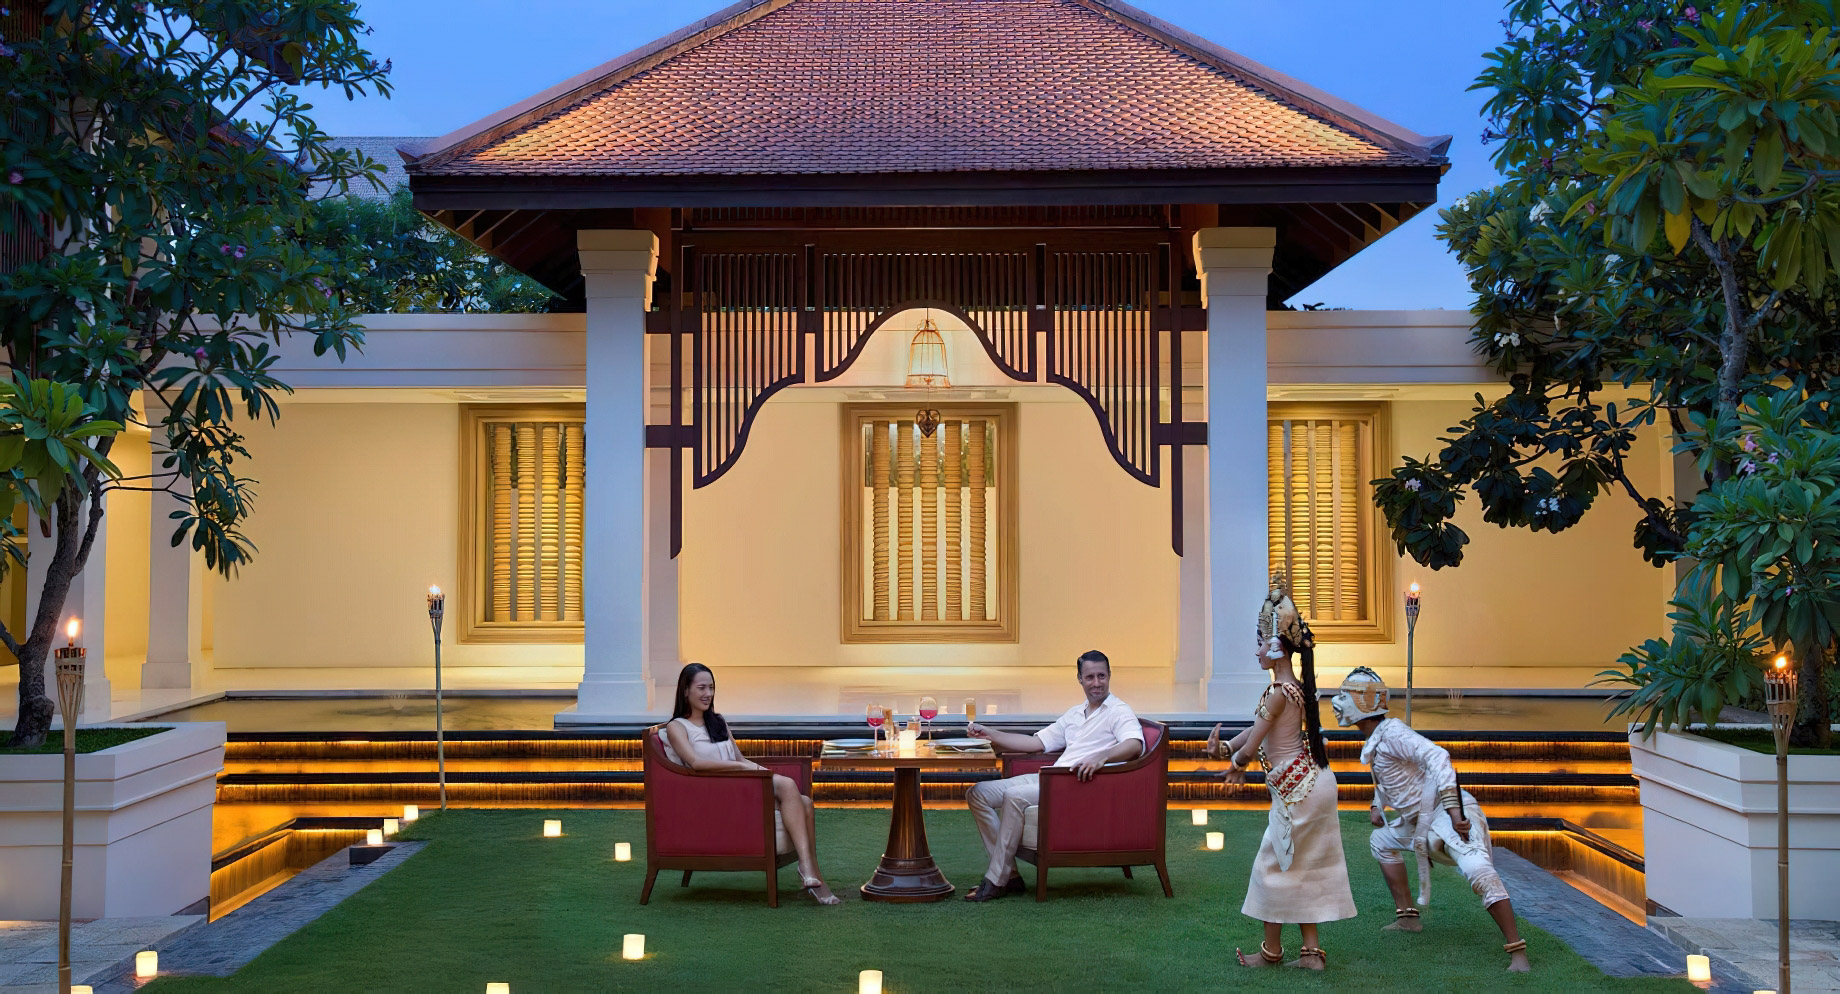 Anantara Angkor Resort – Siem Reap, Cambodia – Courtyard Dining